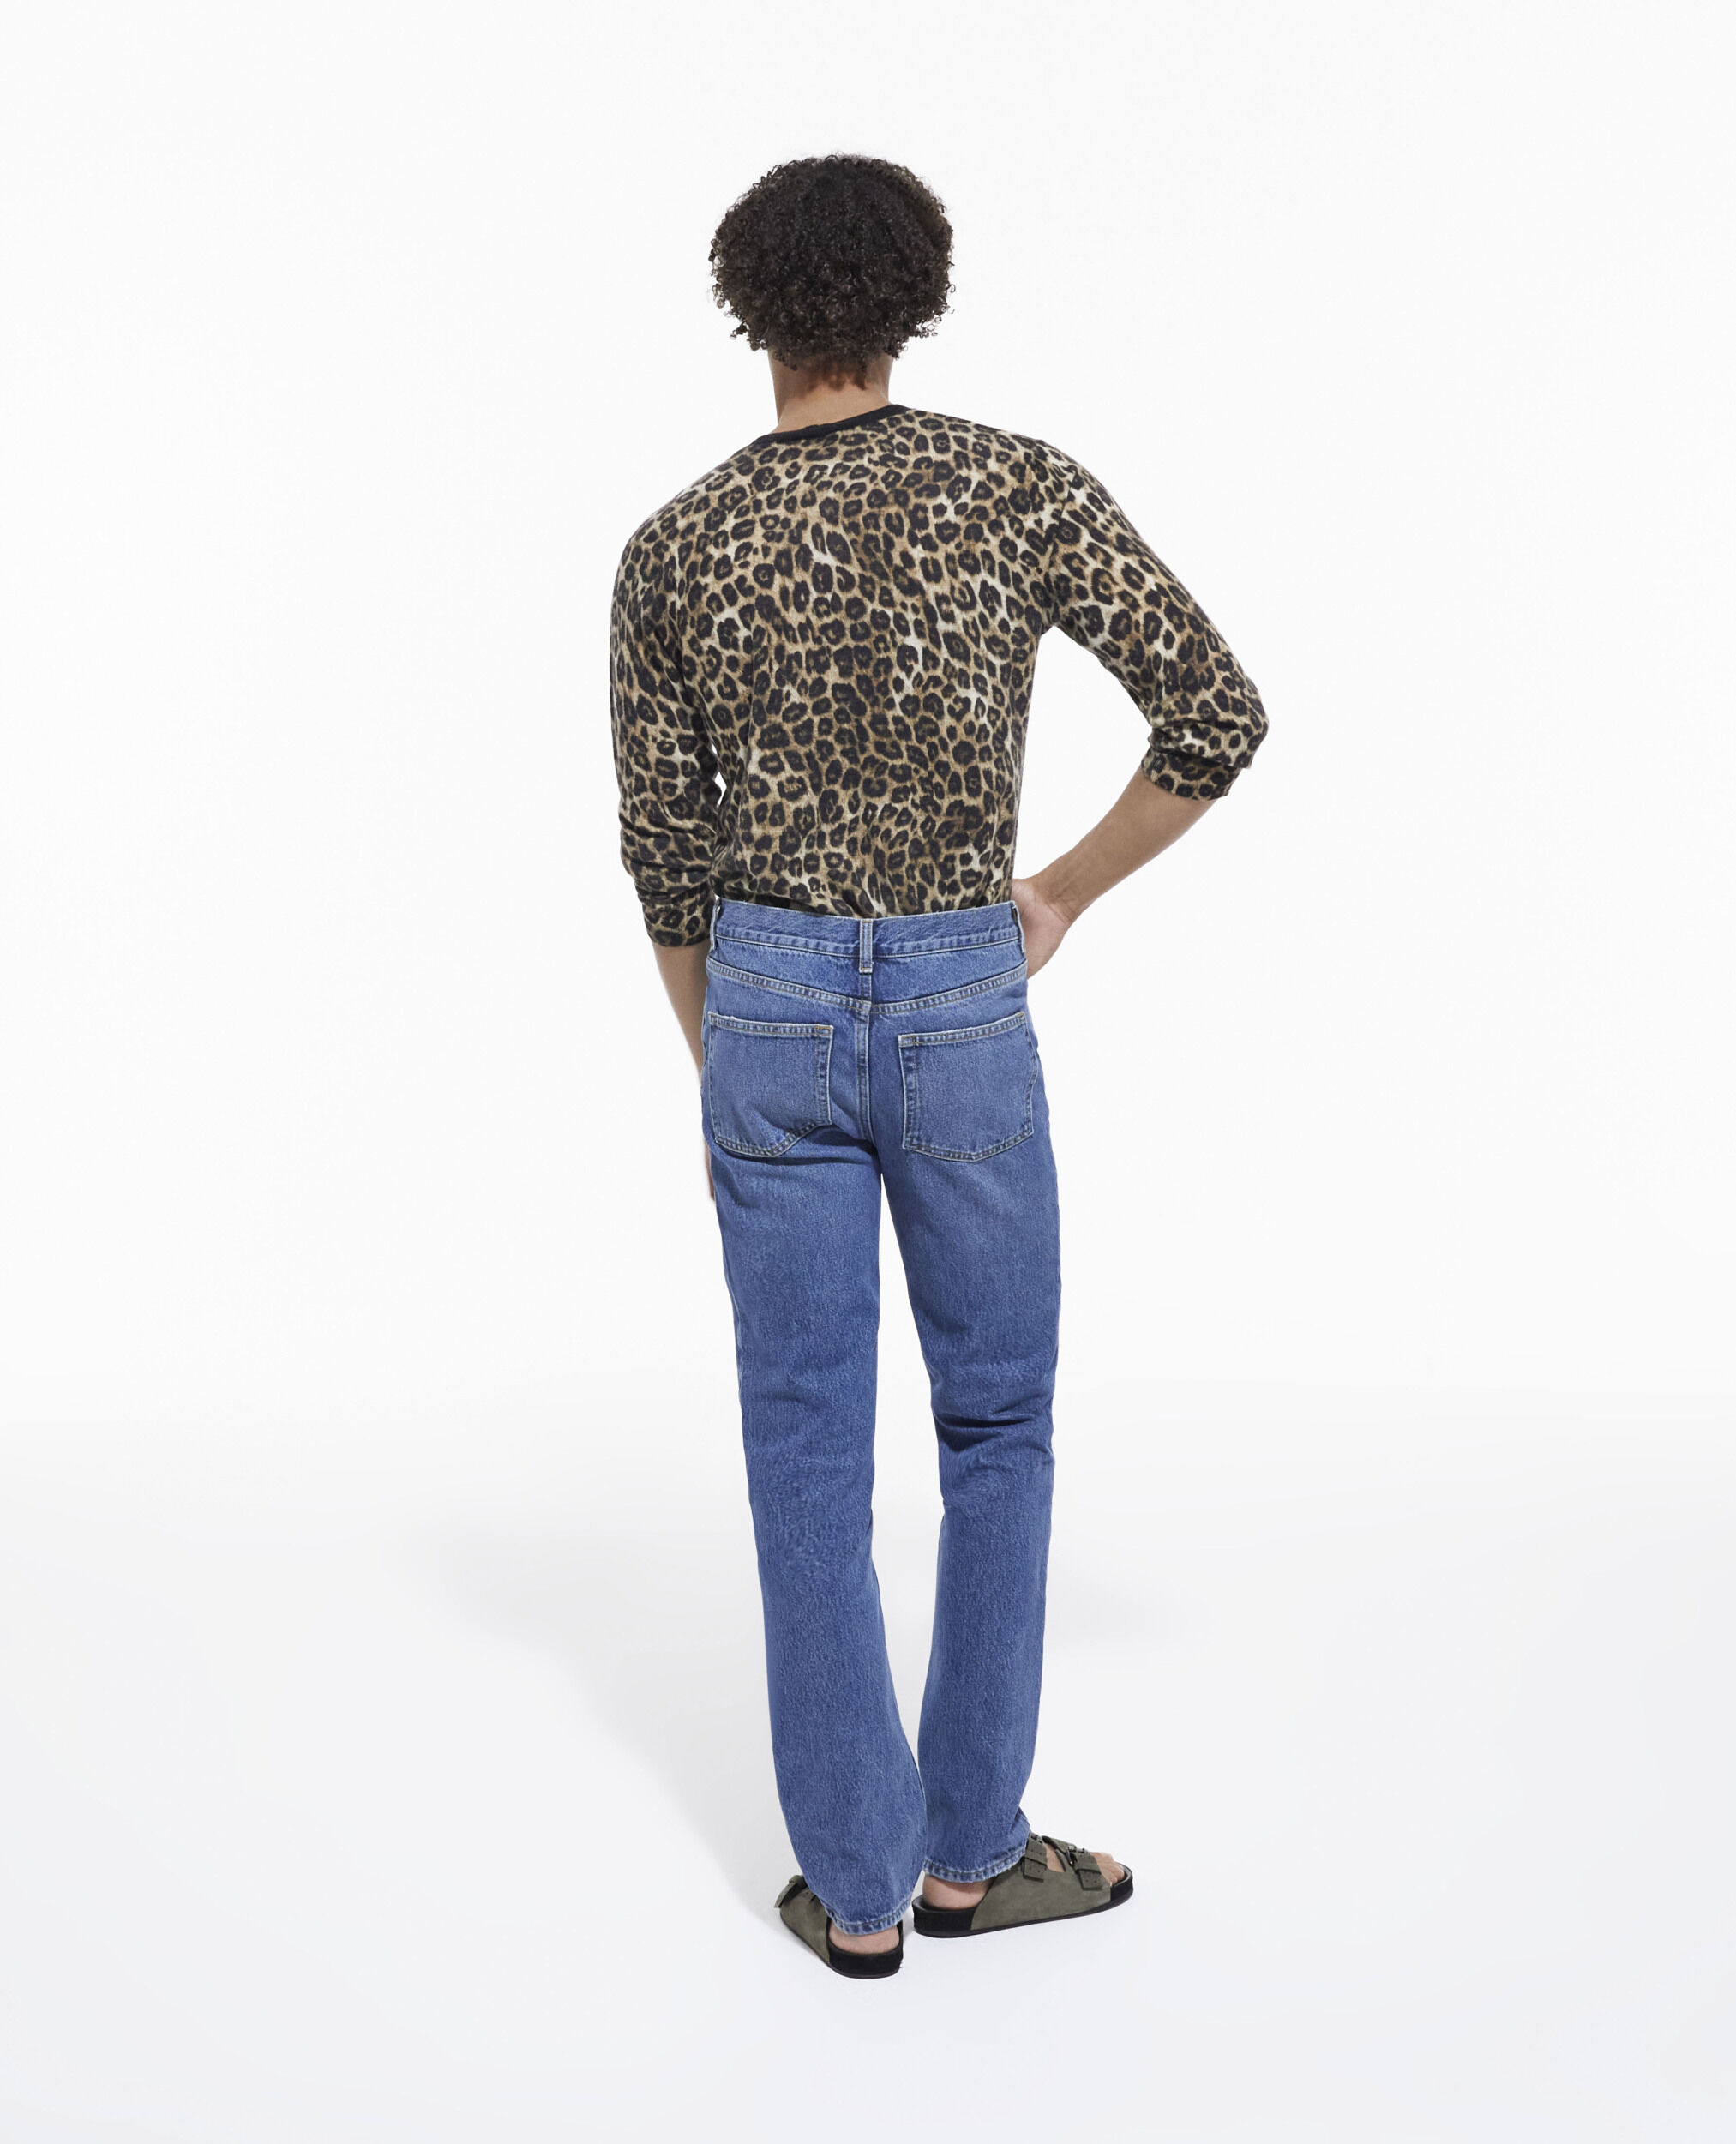 Leopard print cashmere sweater, LEOPARD, hi-res image number null